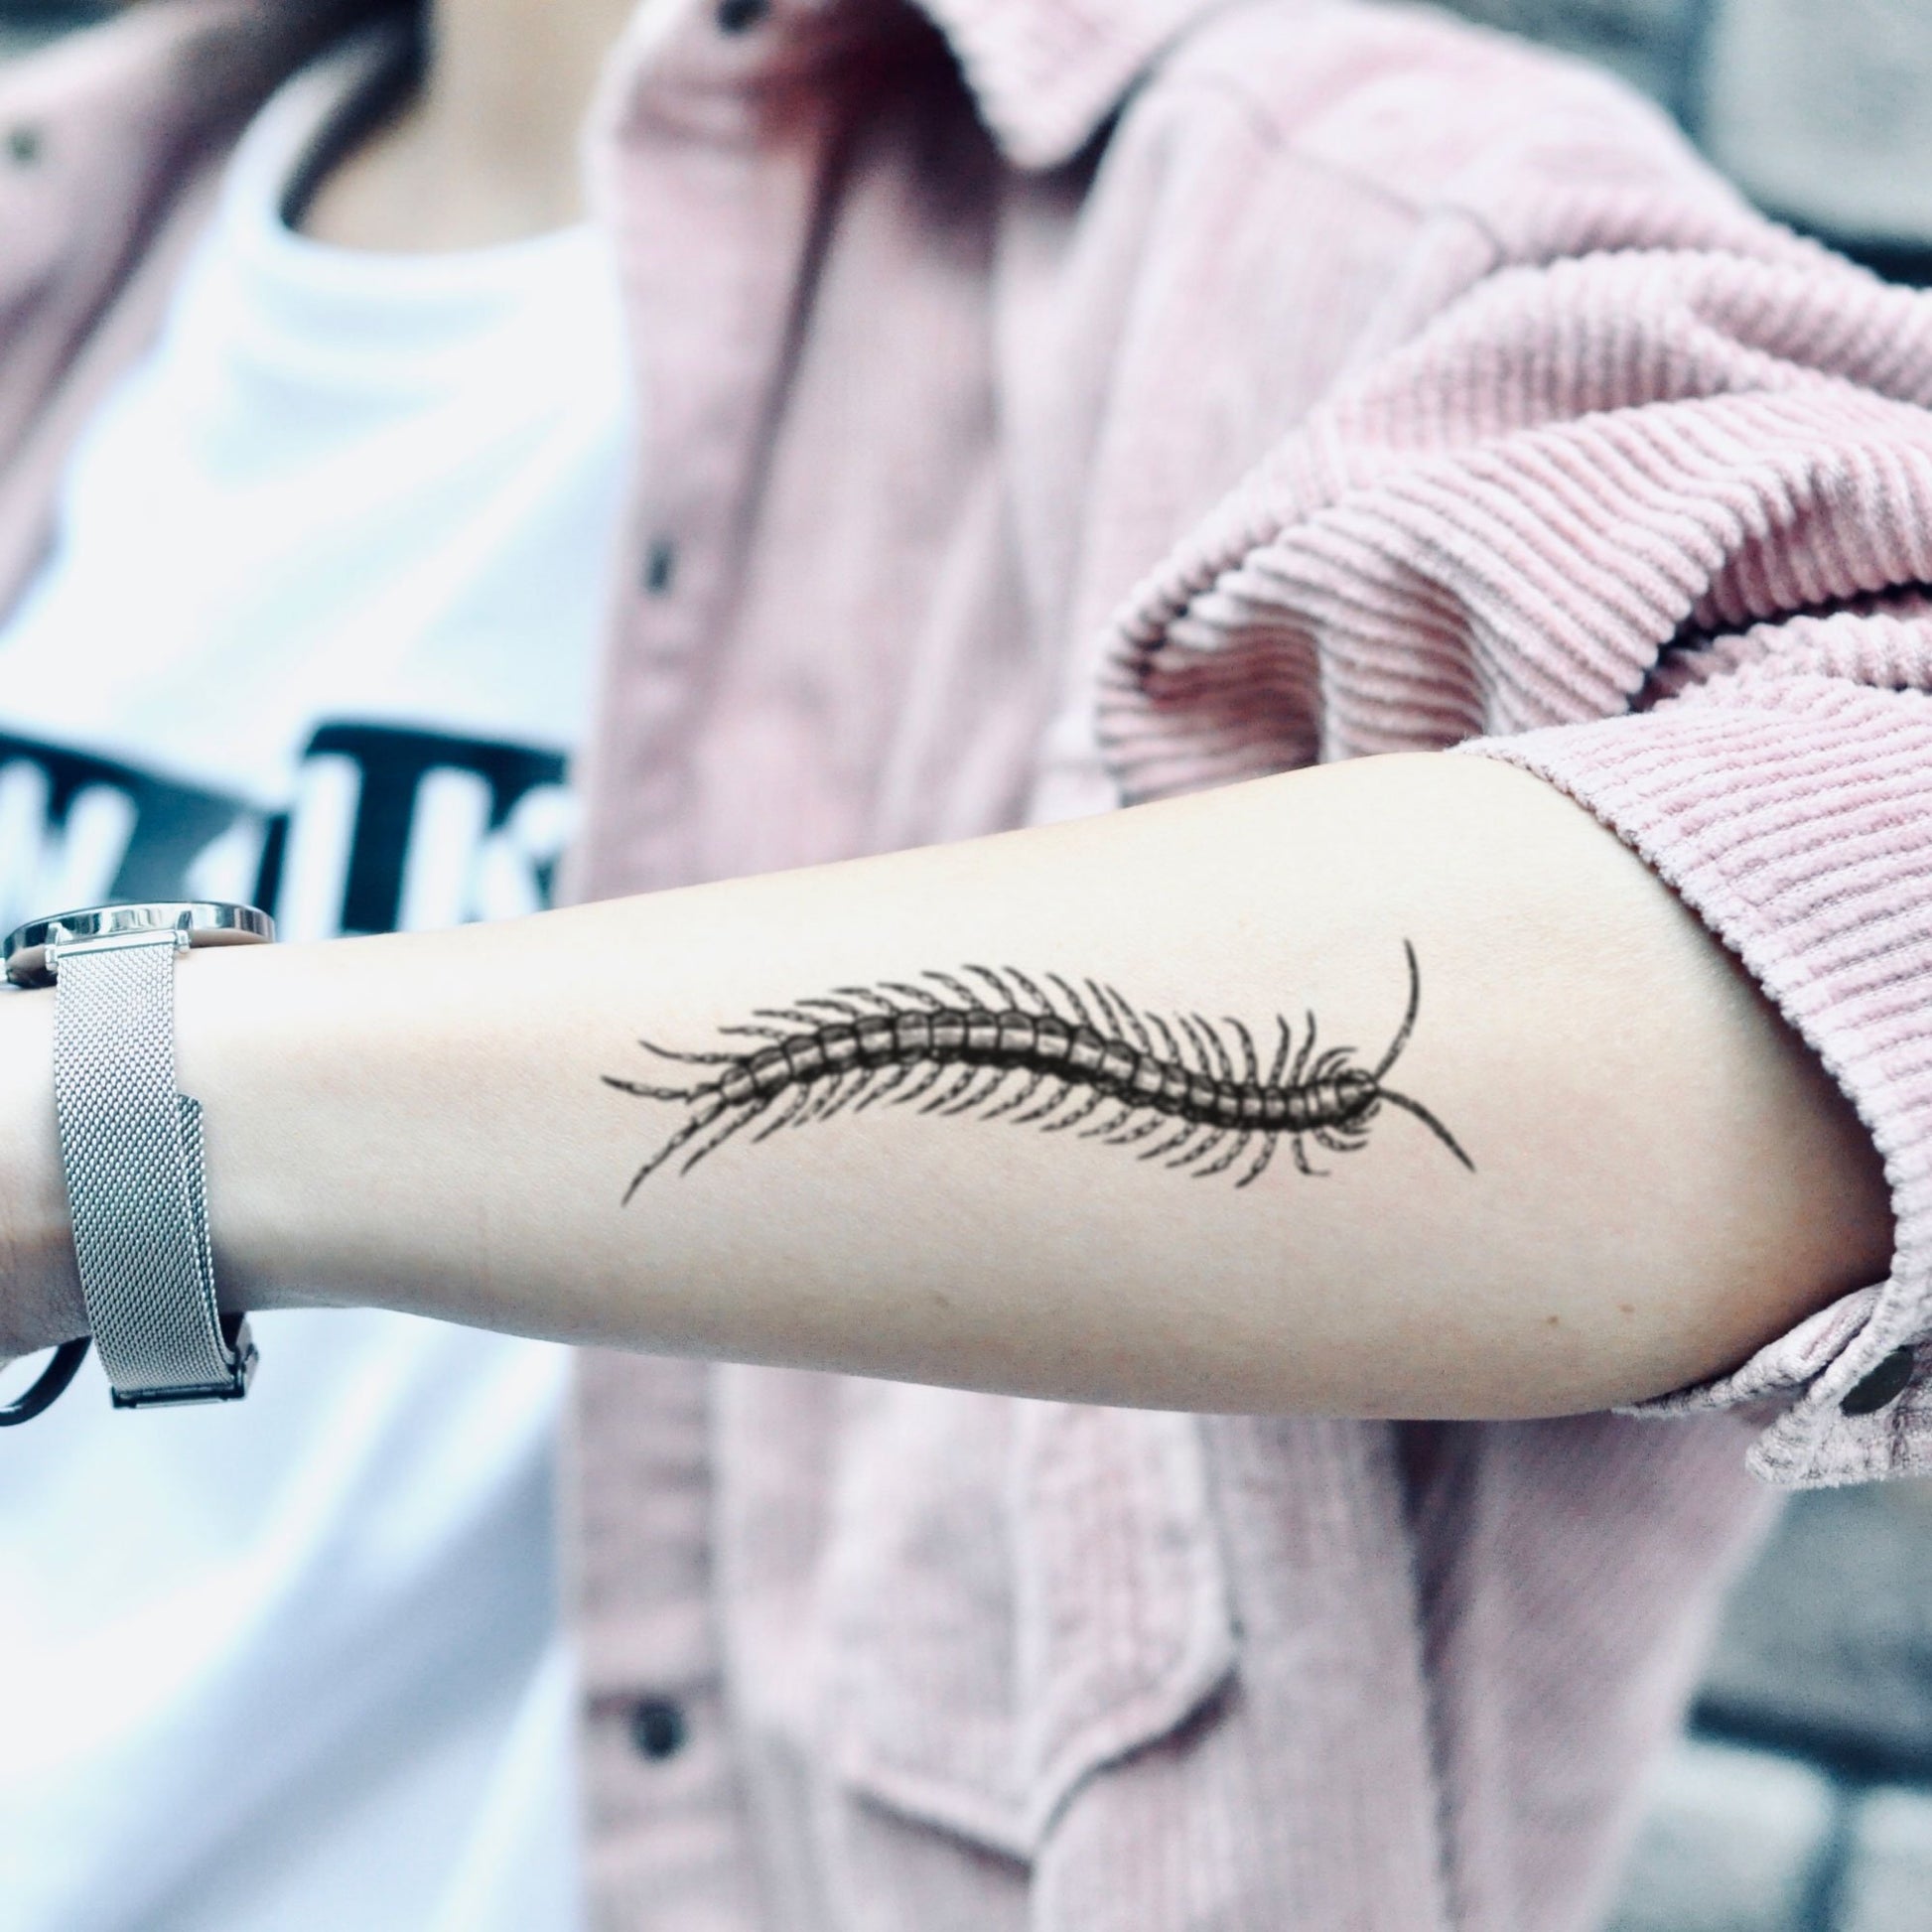 fake big centipede animal temporary tattoo sticker design idea on forearm